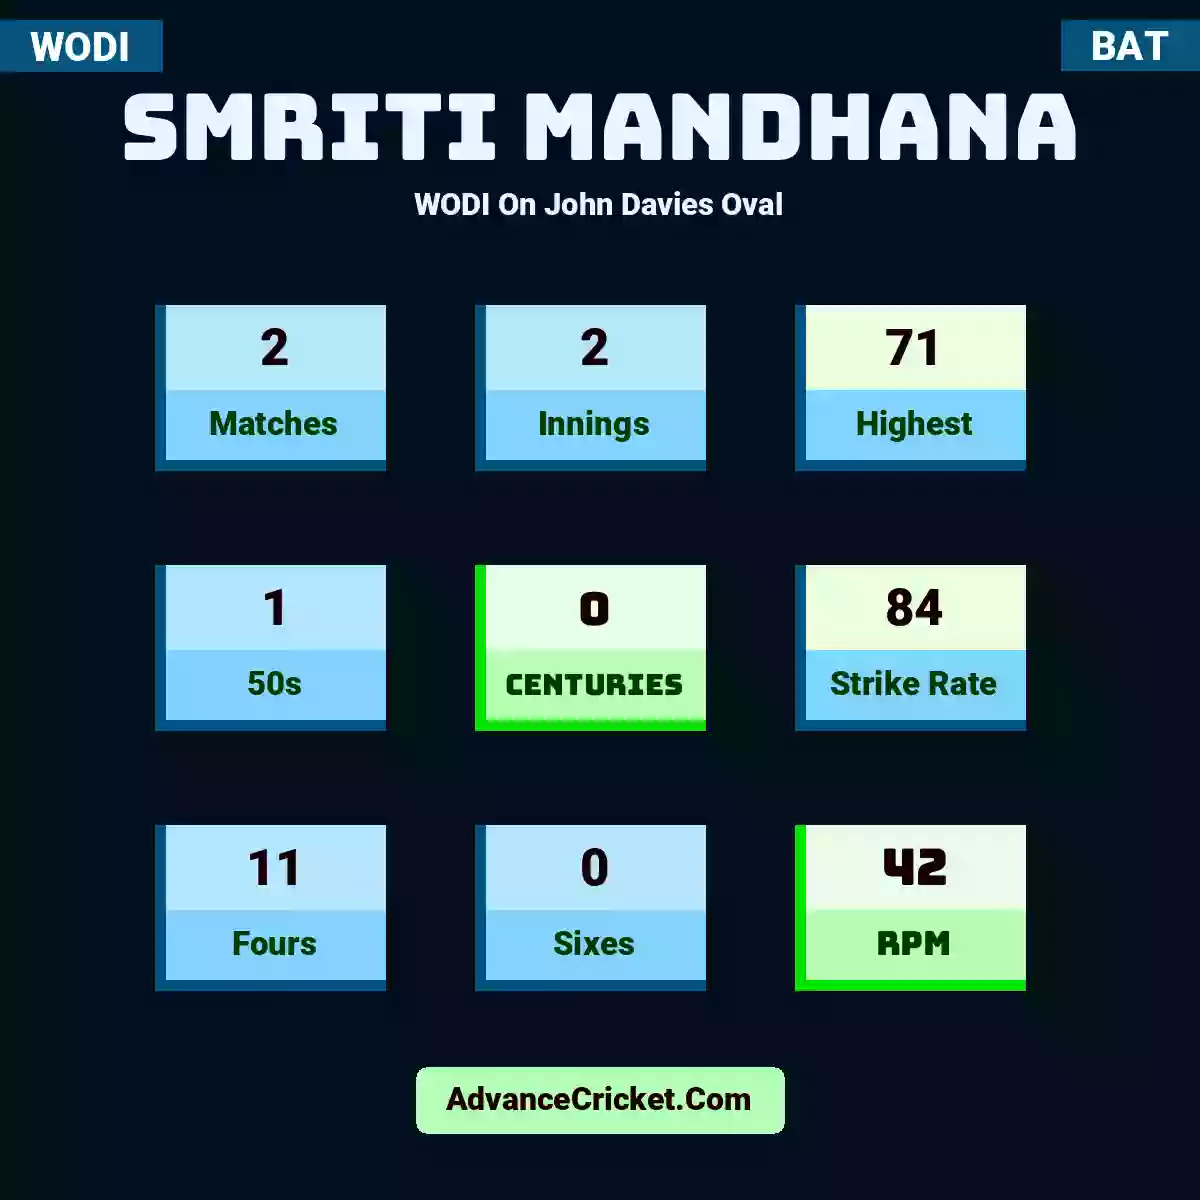 Smriti Mandhana WODI  On John Davies Oval, Smriti Mandhana played 2 matches, scored 71 runs as highest, 1 half-centuries, and 0 centuries, with a strike rate of 84. S.Mandhana hit 11 fours and 0 sixes, with an RPM of 42.